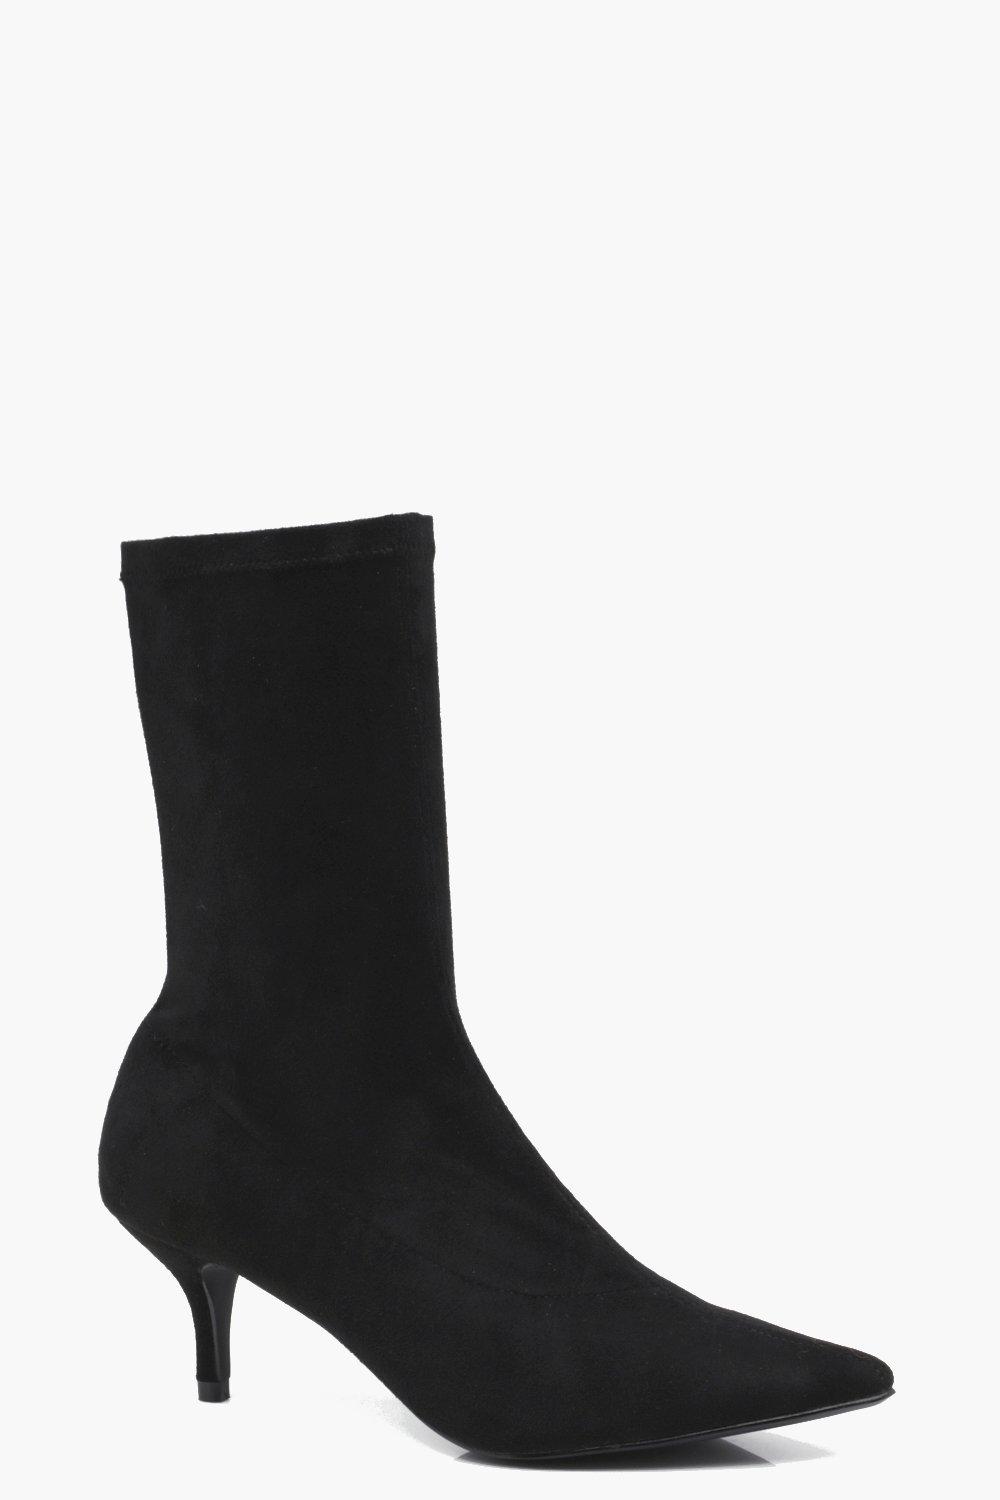 kitten heel black sock boots